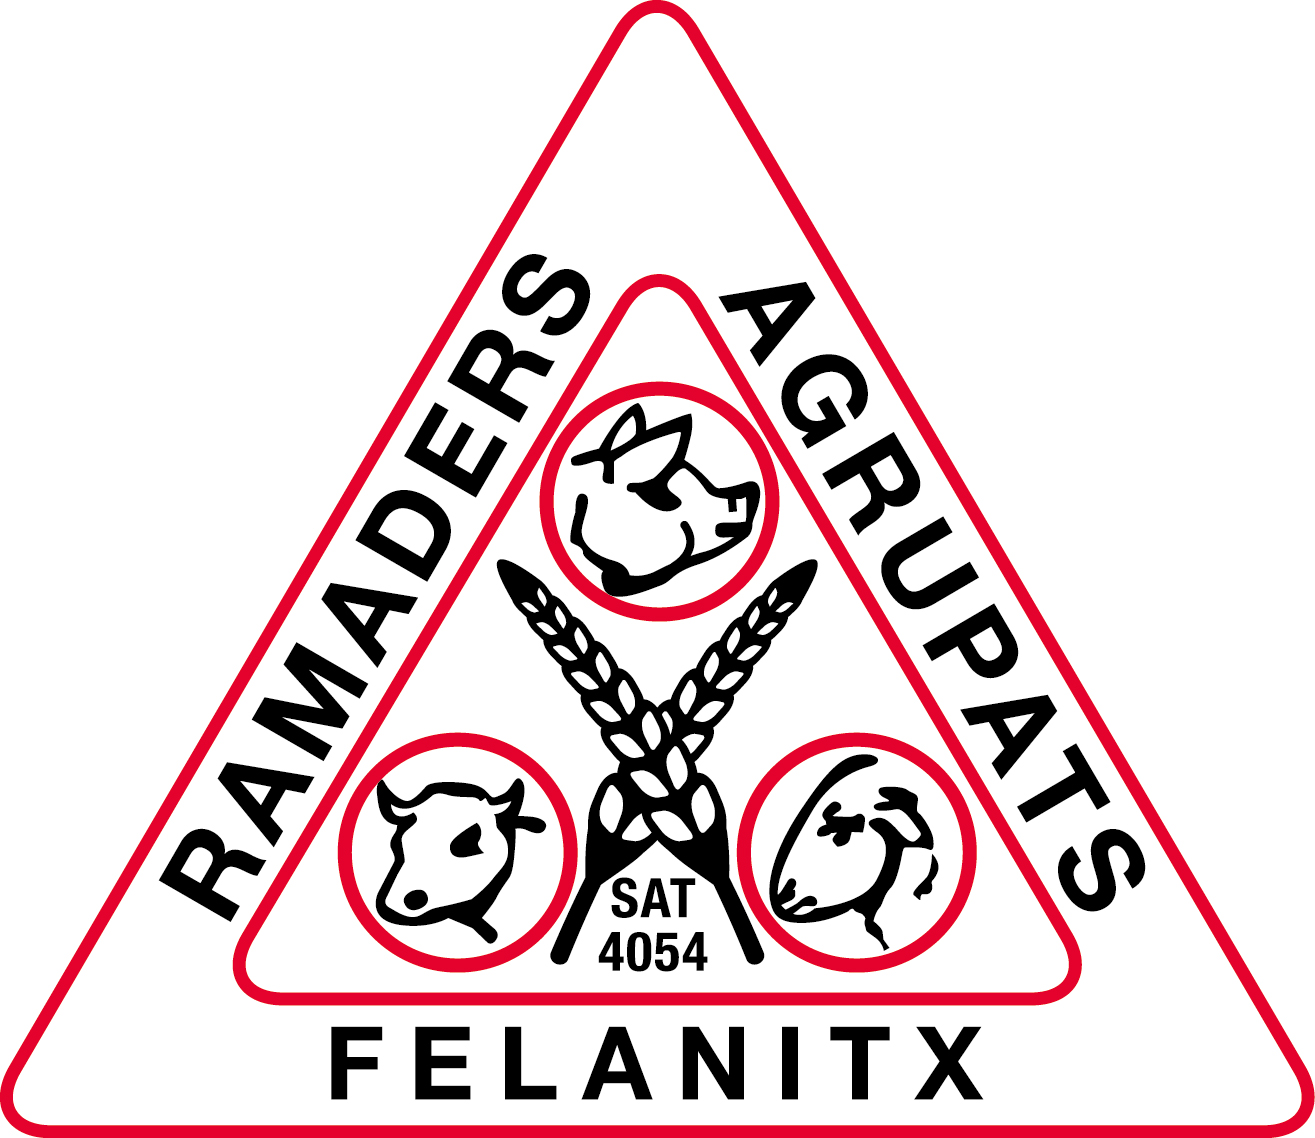 RAMADERS AGRUPATS, S.A.T. - Illes Balears - Productes agroalimentaris, denominacions d'origen i gastronomia balear